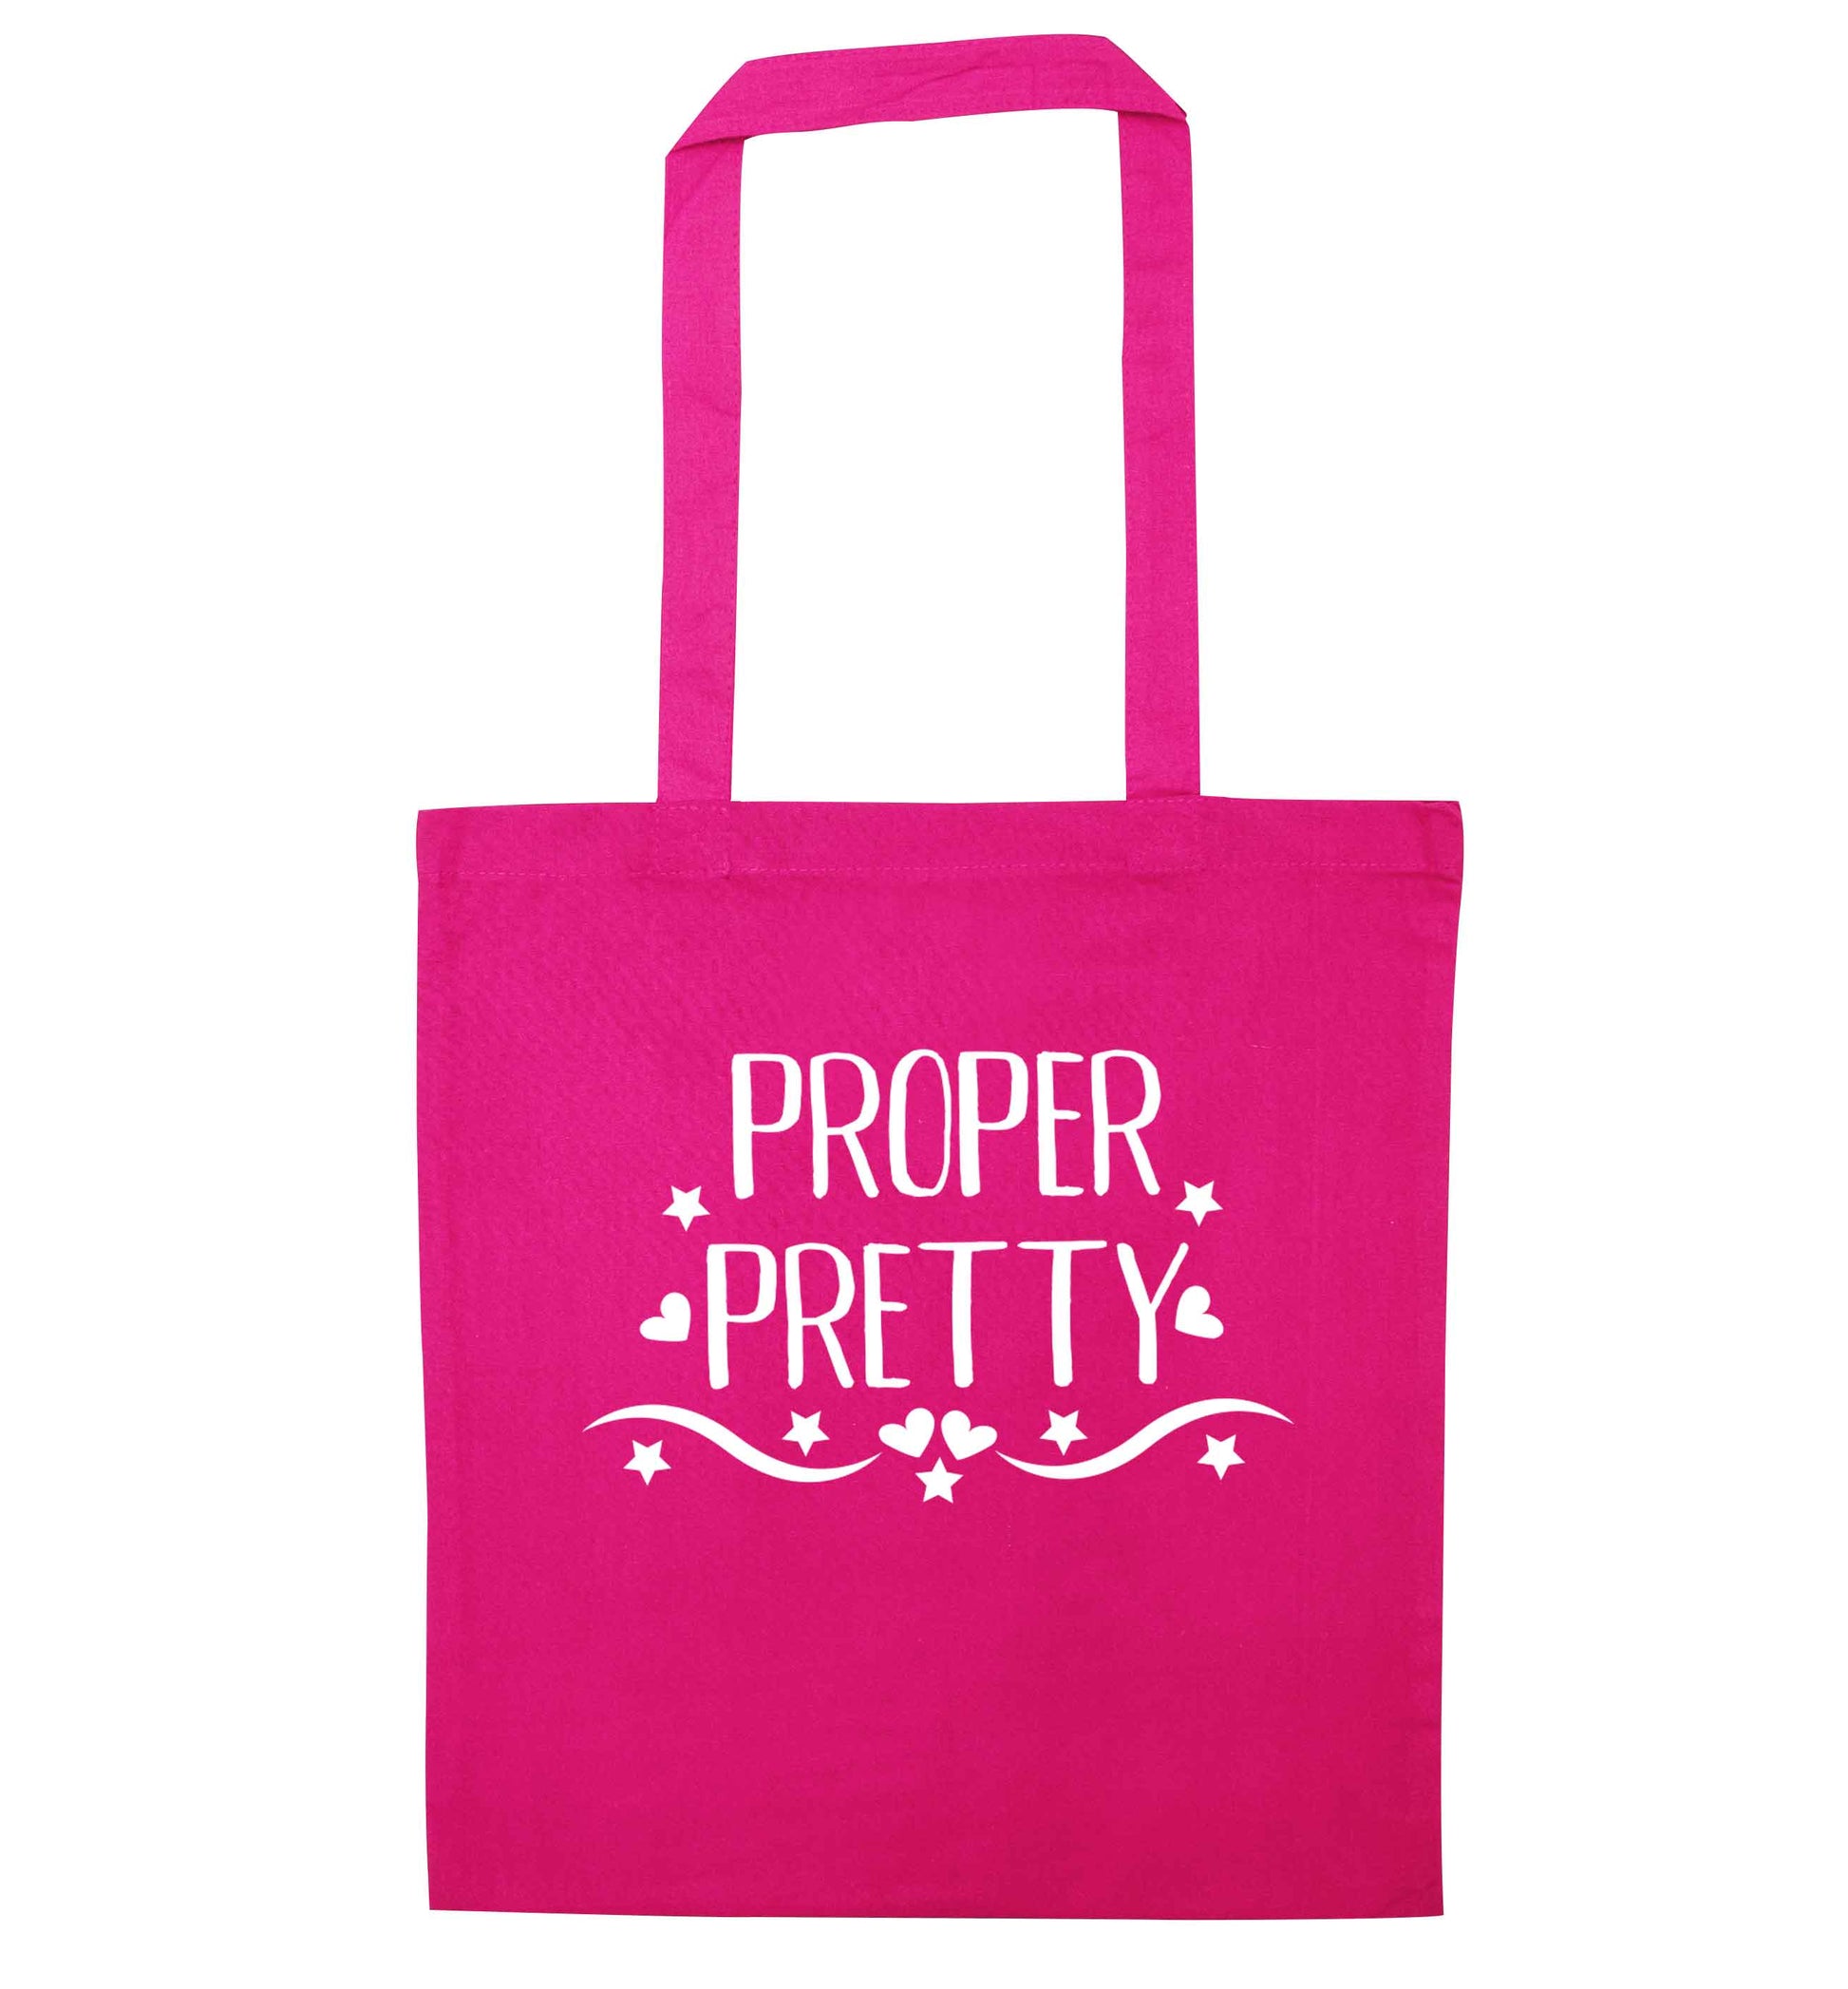 Proper pretty pink tote bag